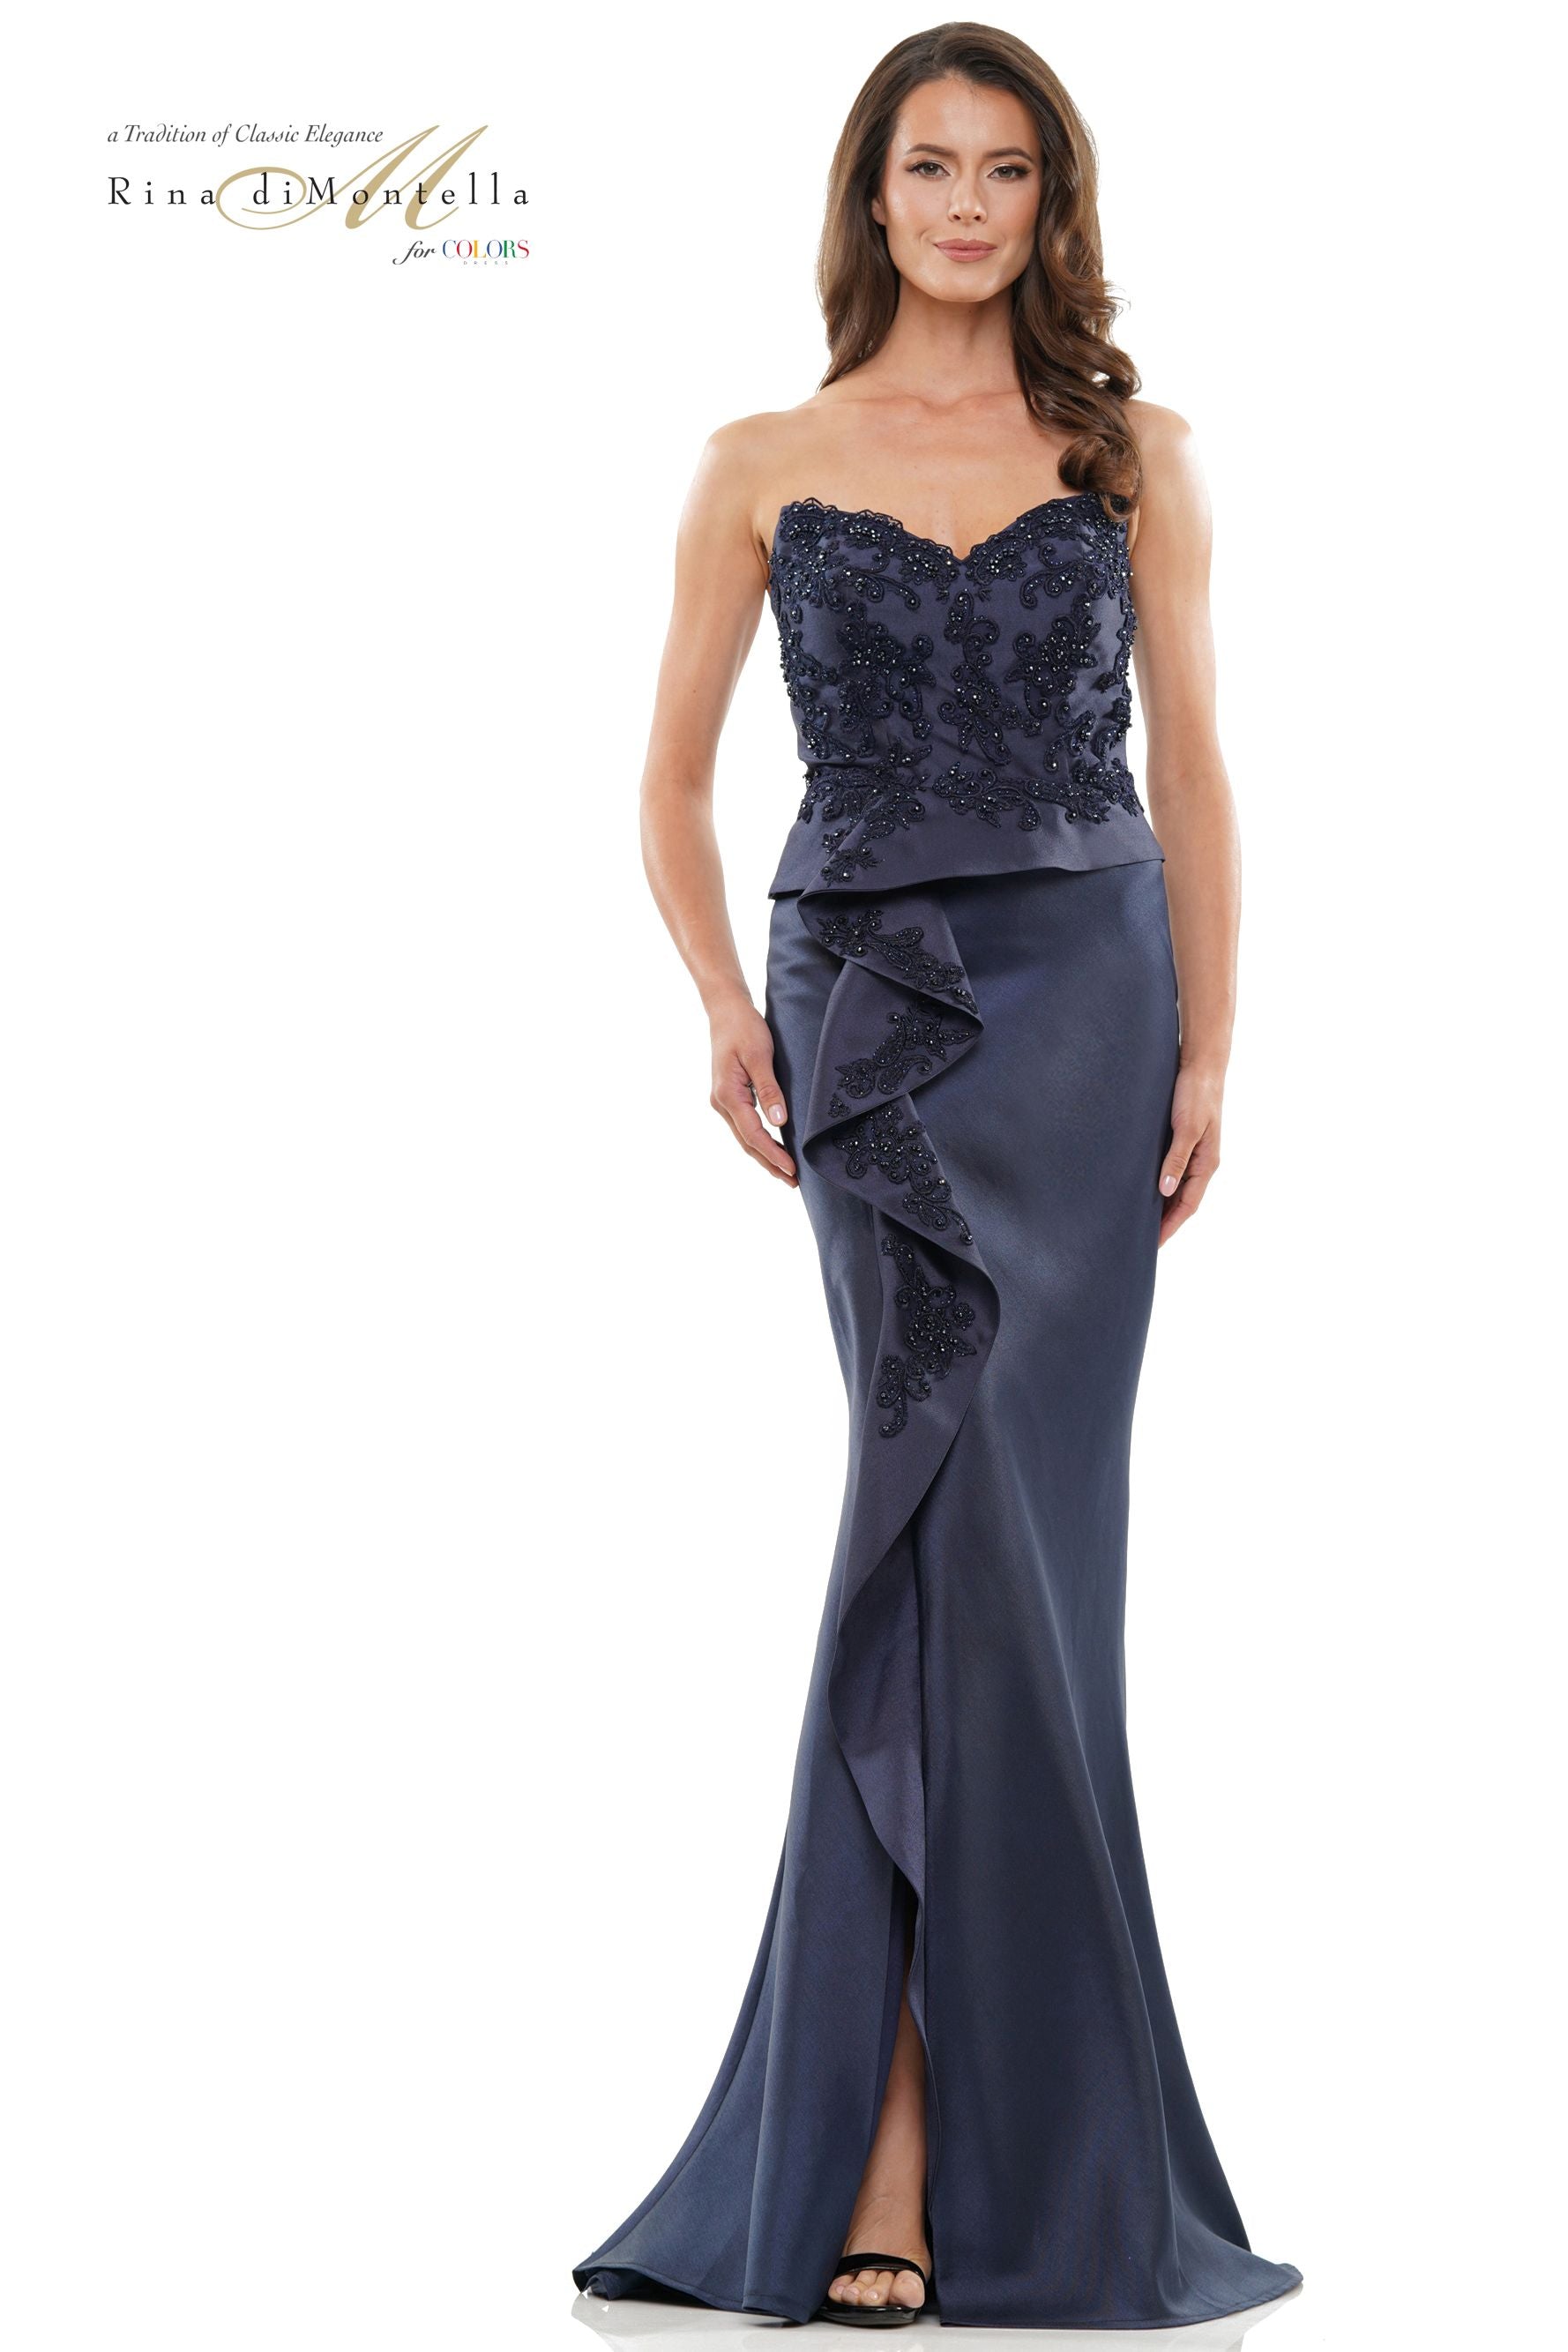 Rina Di Montella Fitted Sweetheart Sheath Evening Dress -RD2903